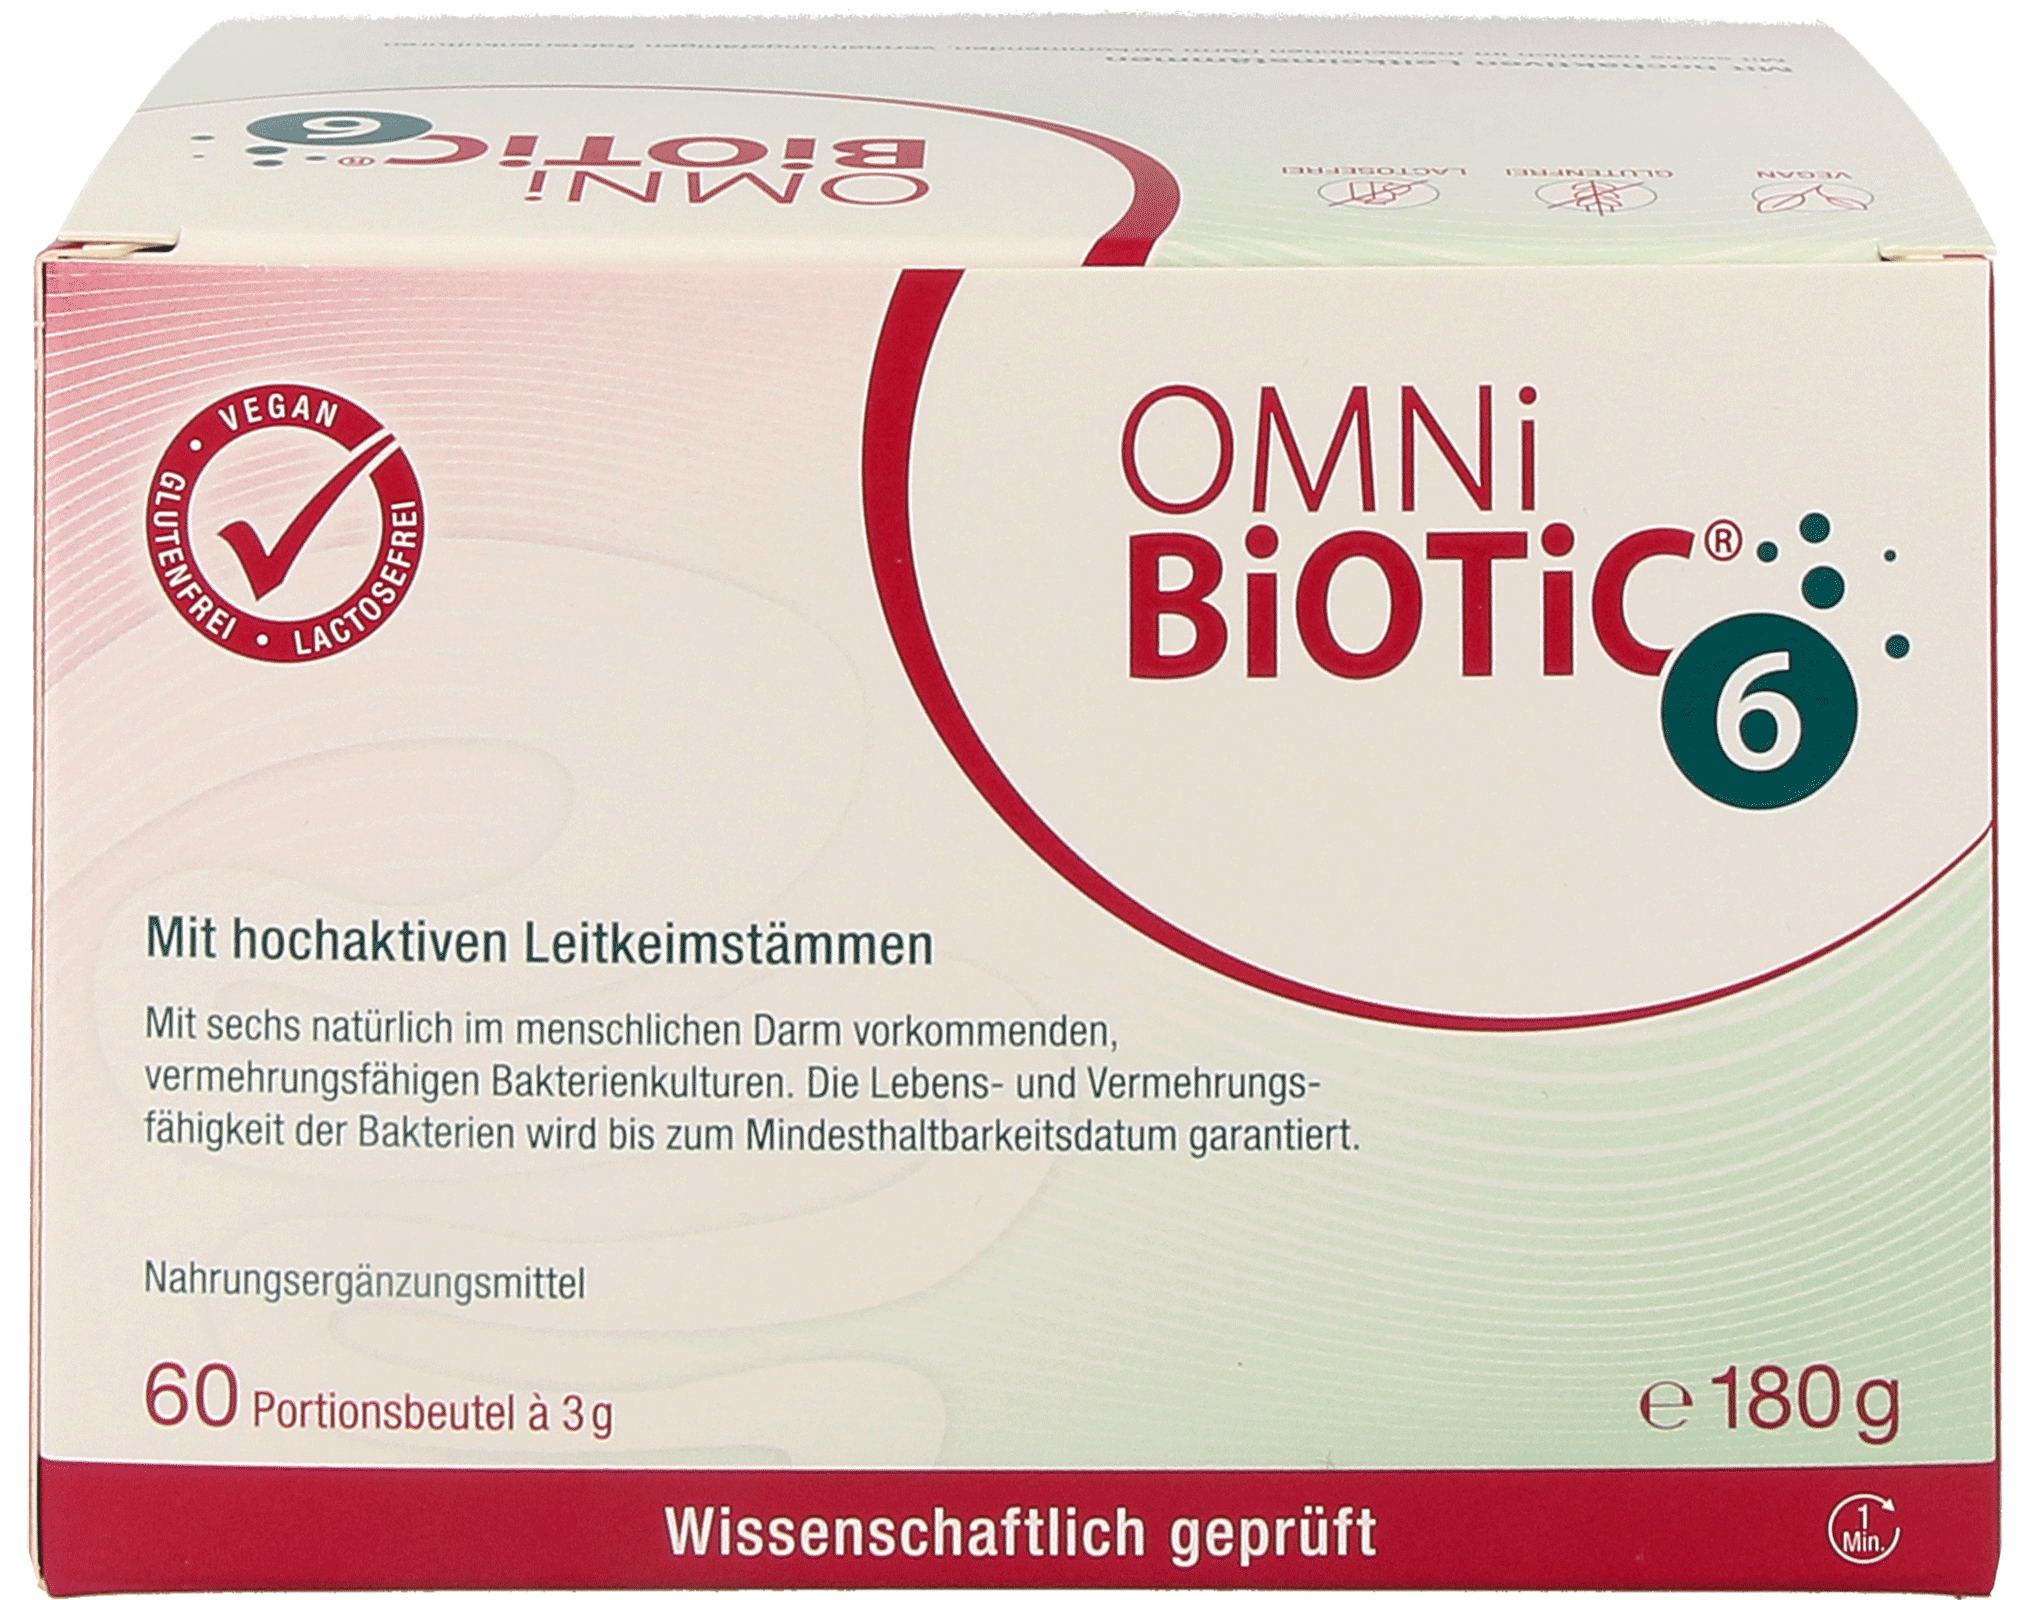 OMNi-BiOTiC® 6, 60 portions